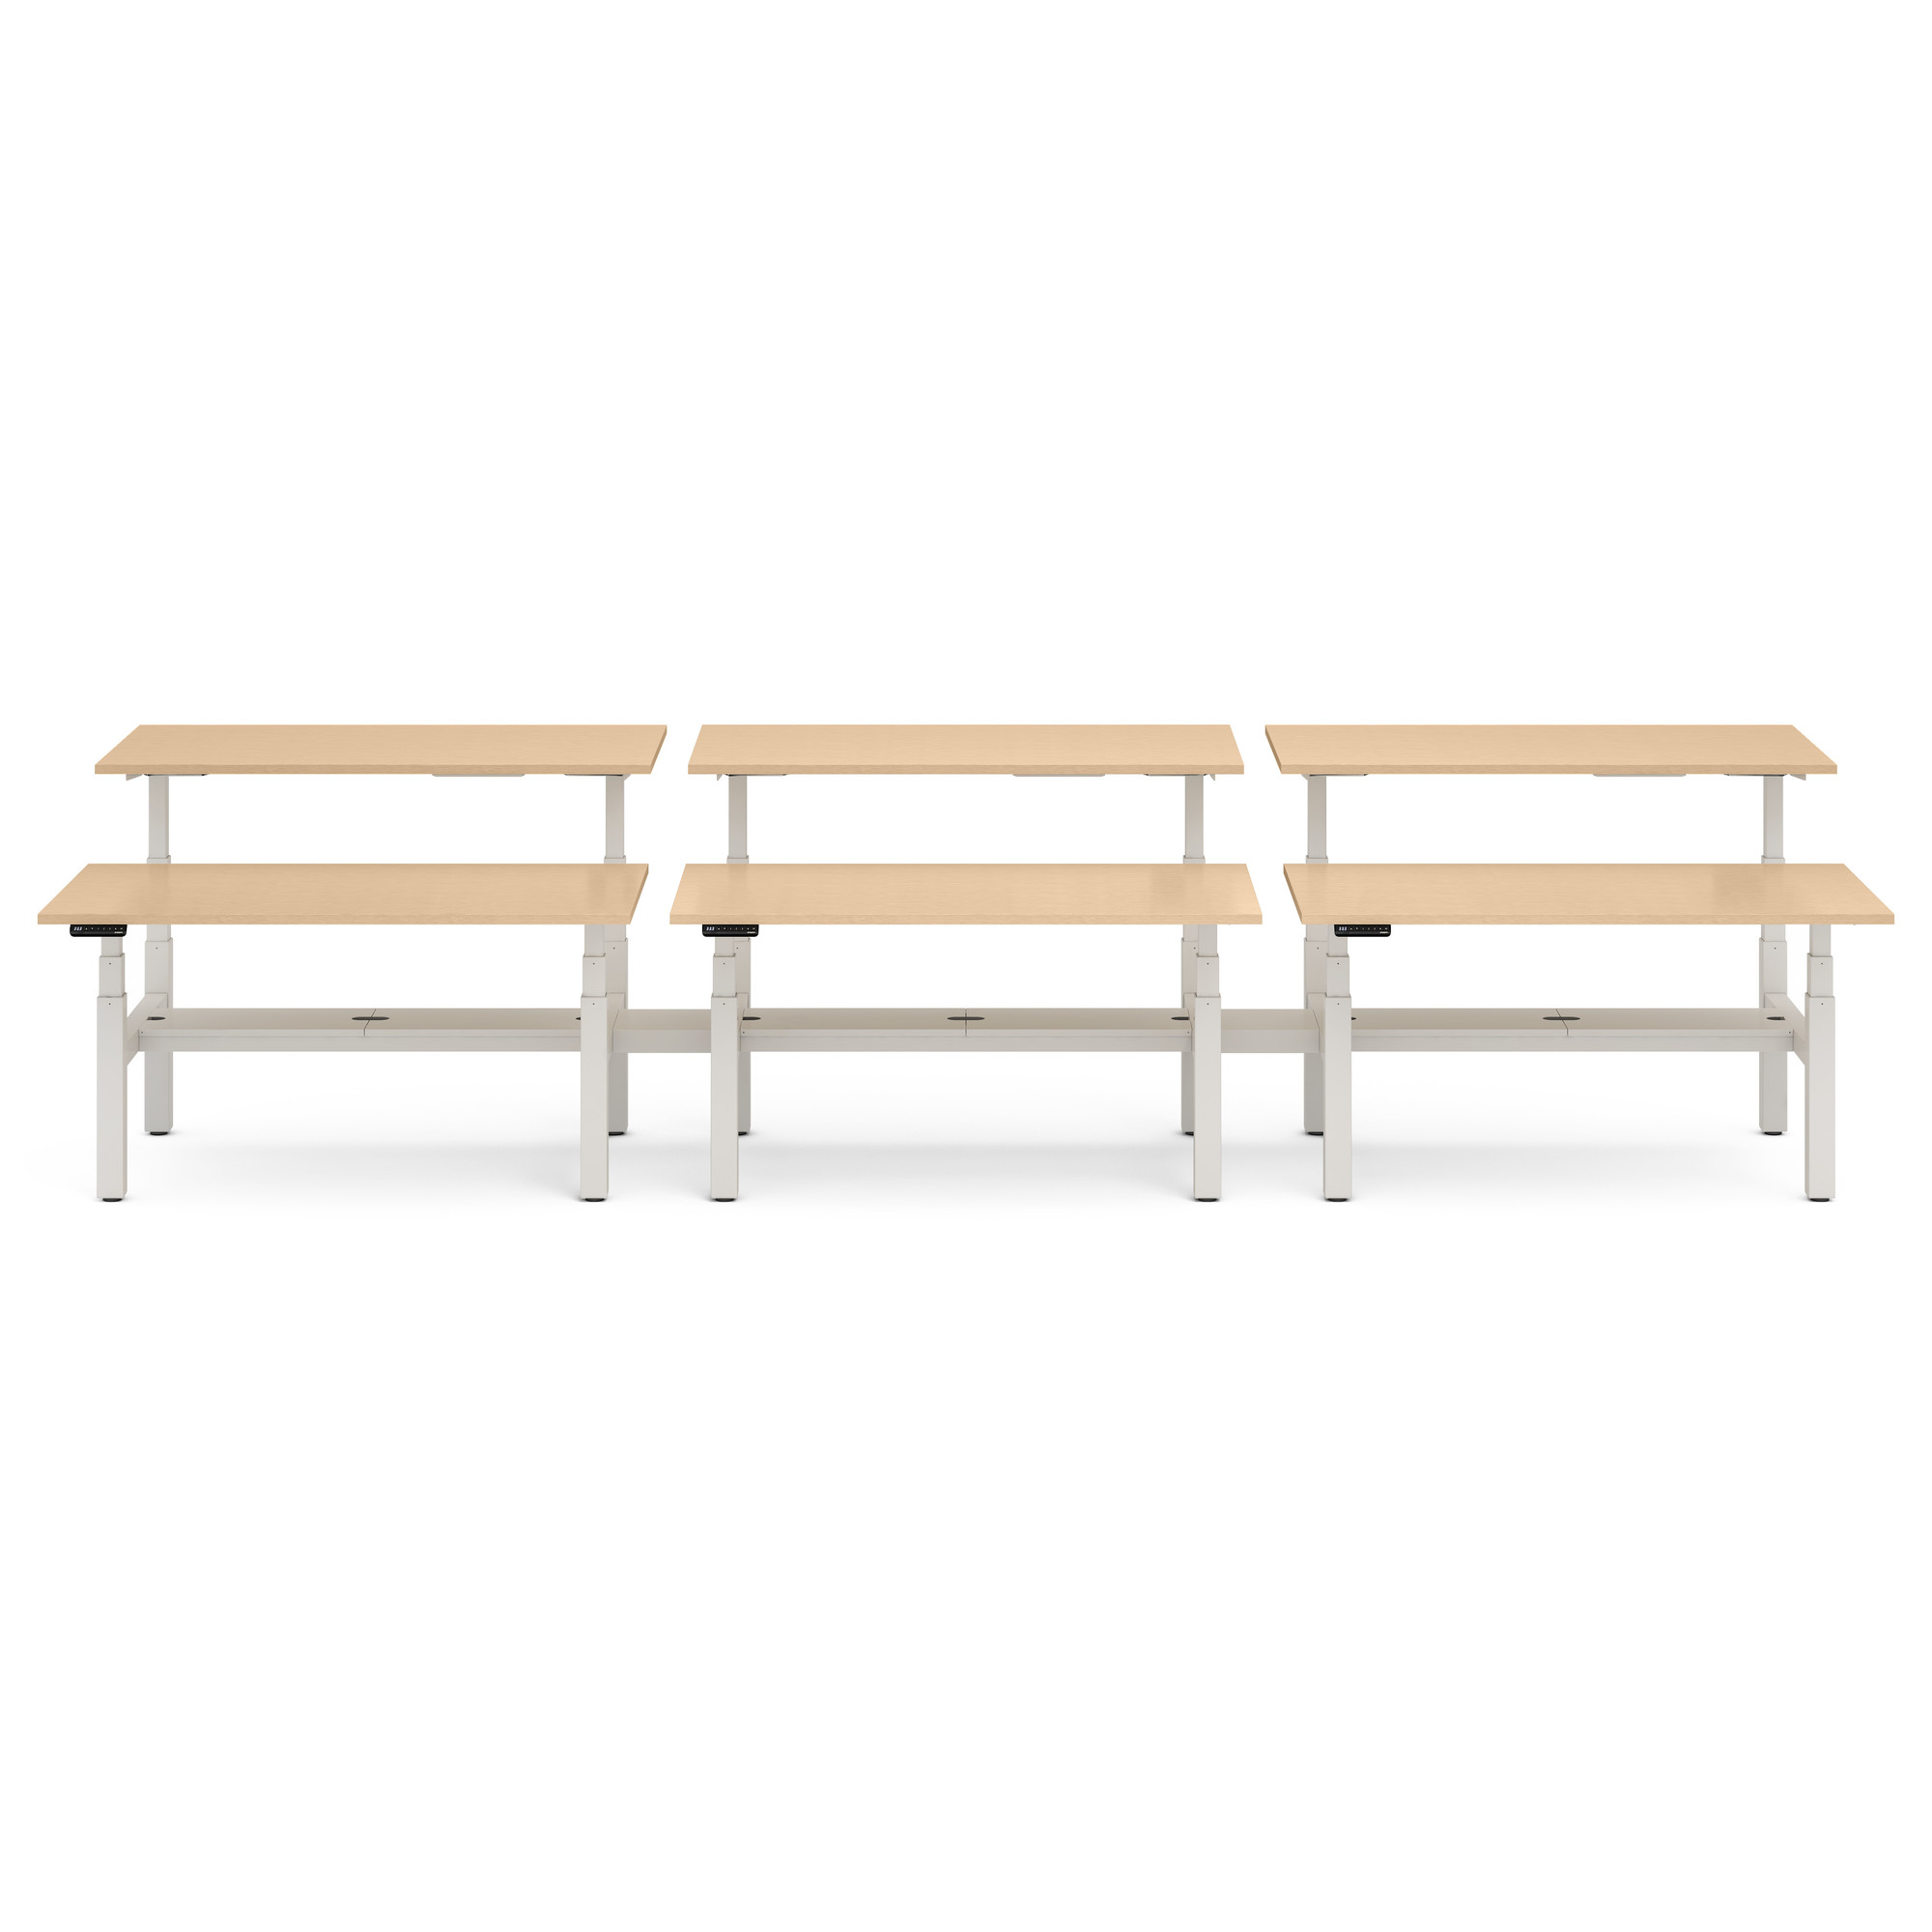 Series L Adjustable Height Double Desk for 6, Natural Oak, 60", White Legs,Natural Oak,hi-res